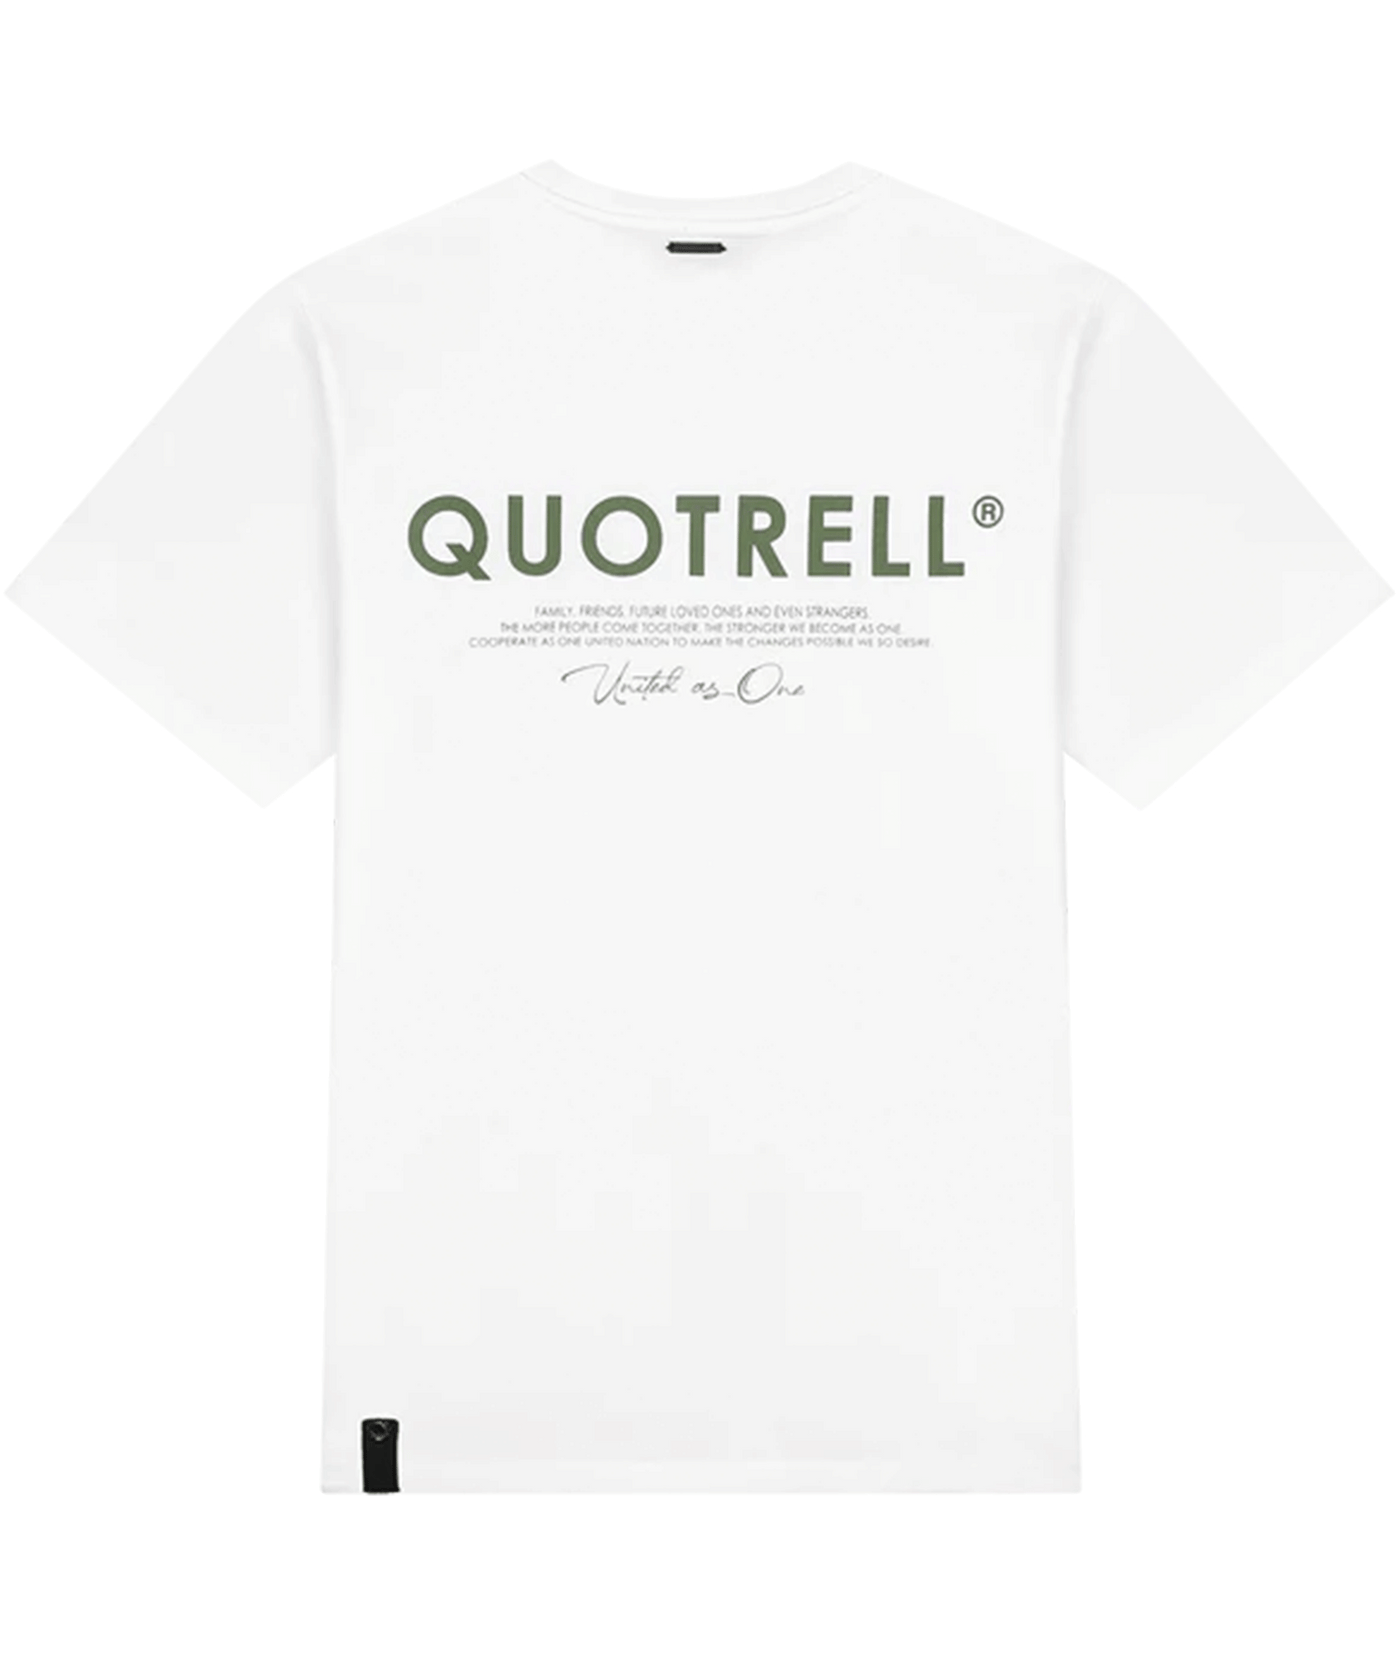 Quotrell - Jaipur - T-shirt - White/army